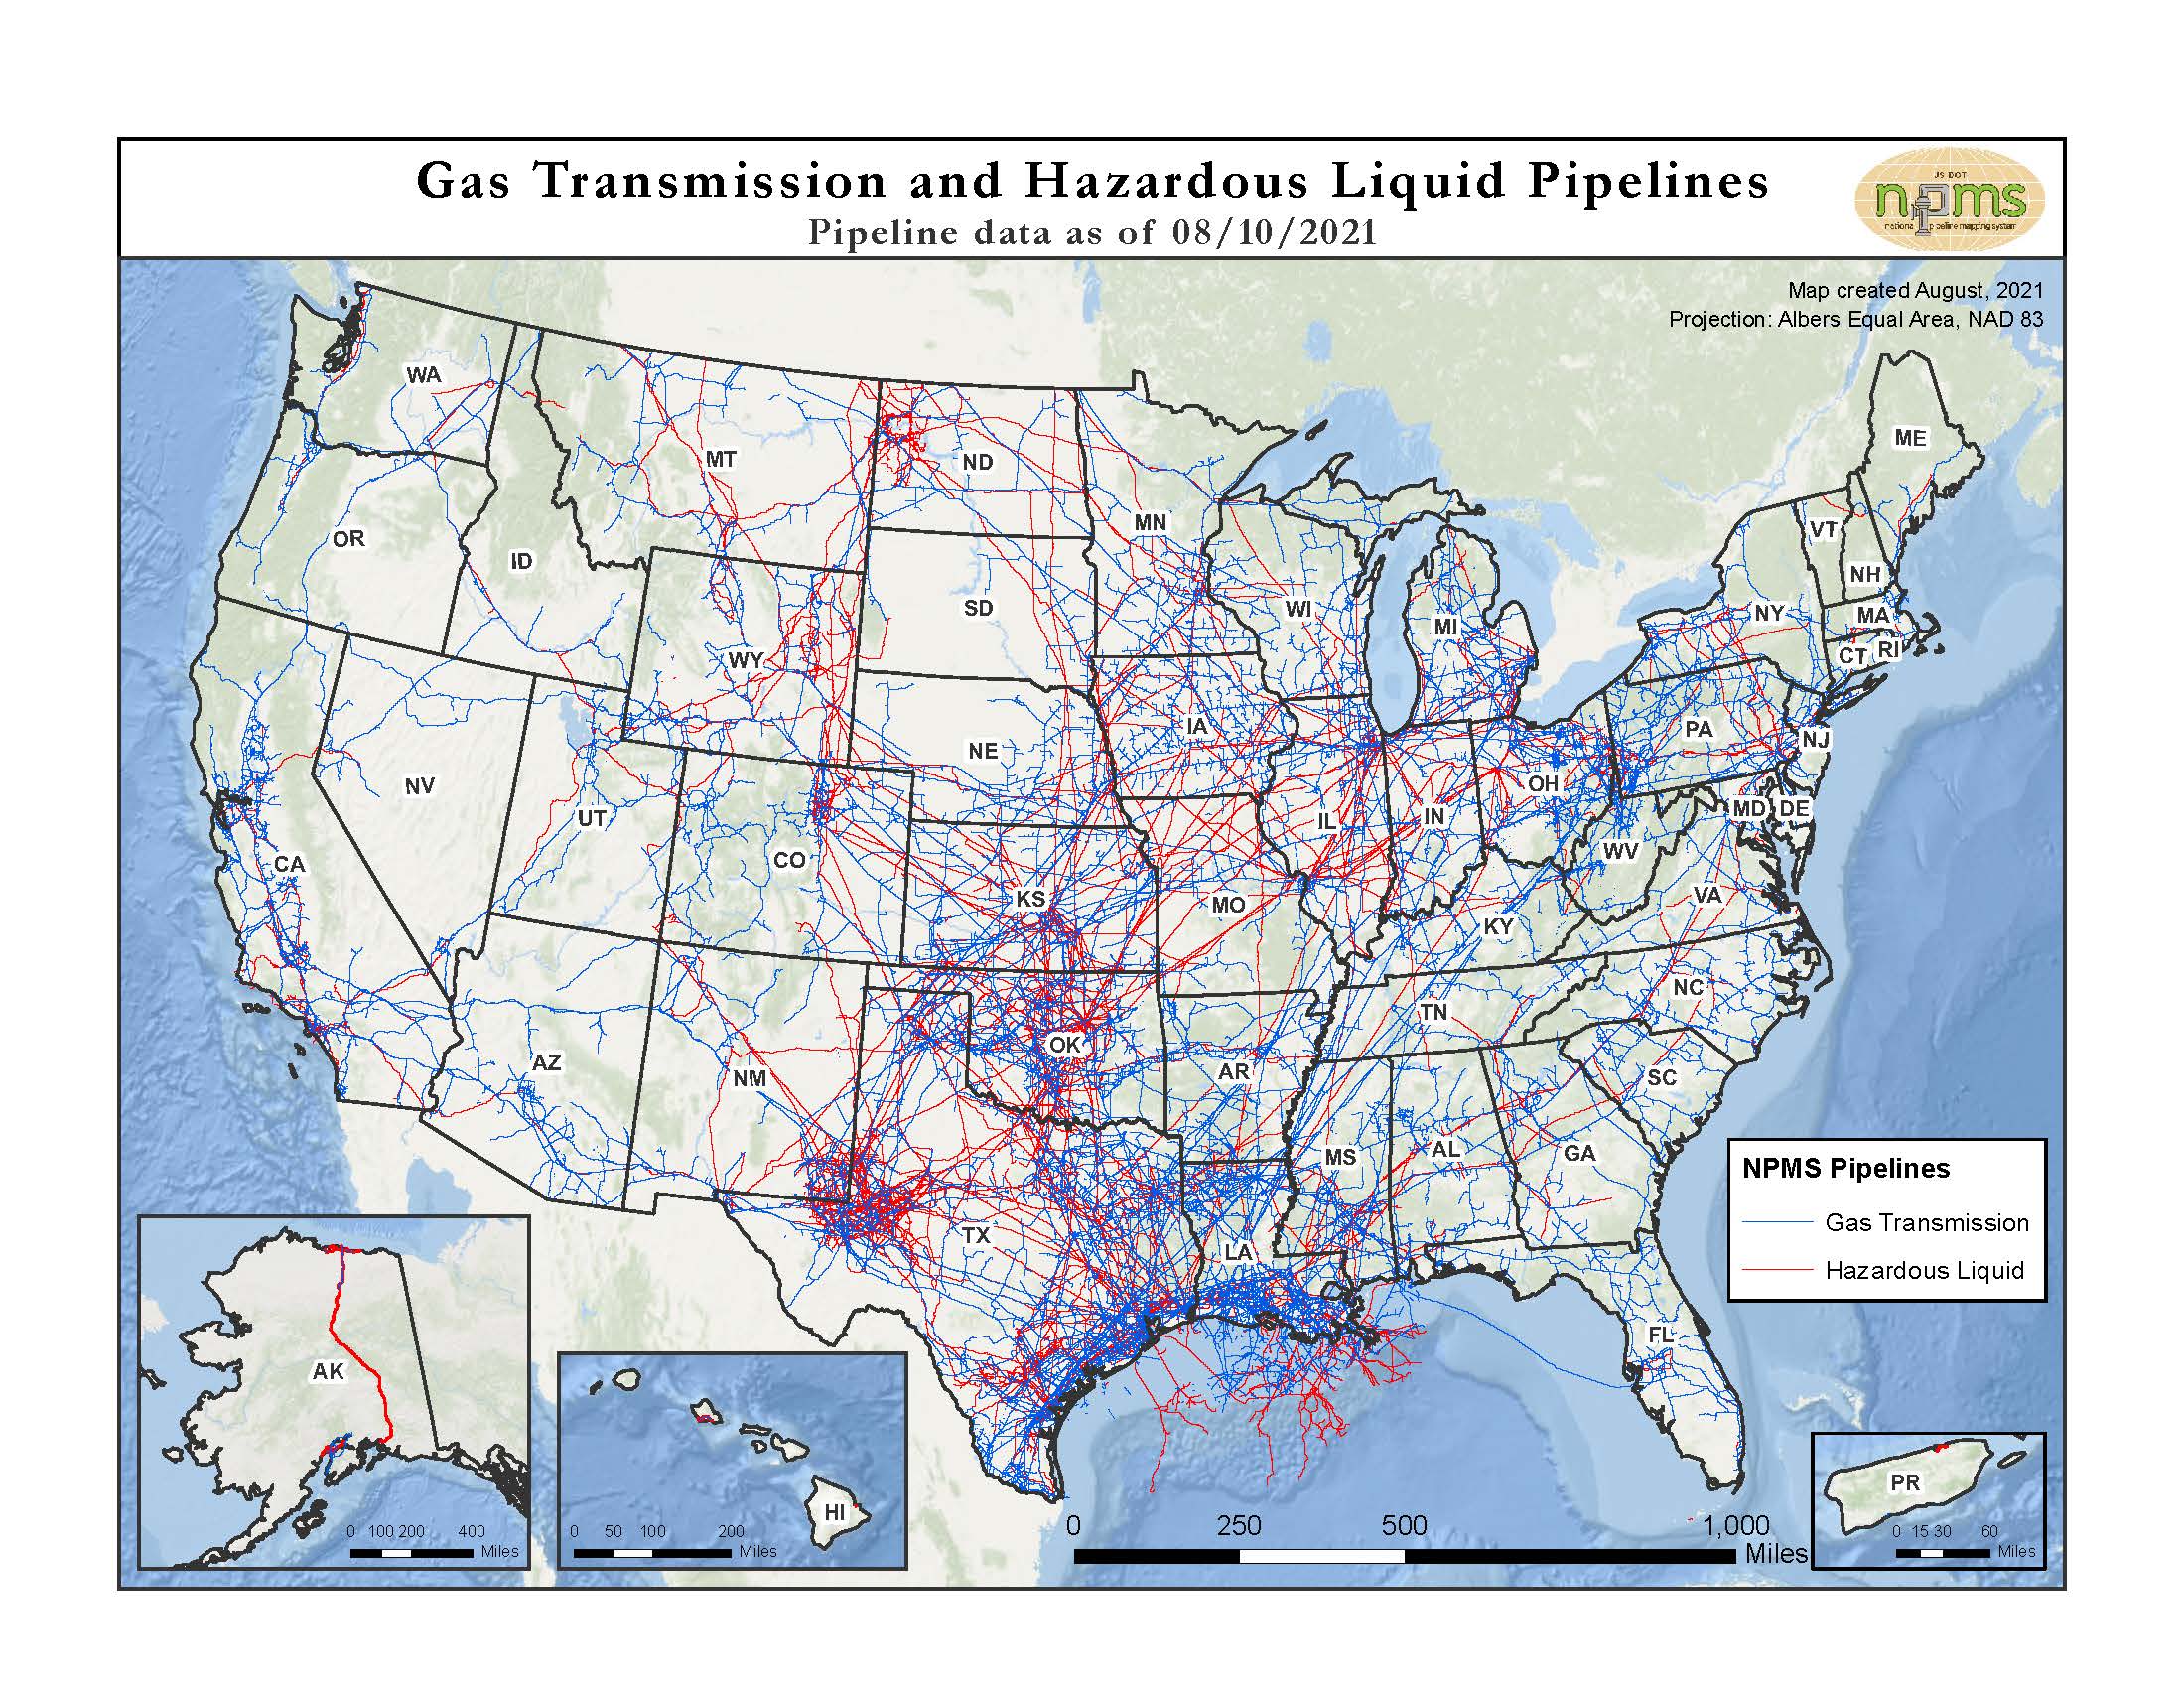 Gas Transmission and Hazardous Liquid Pipelines map